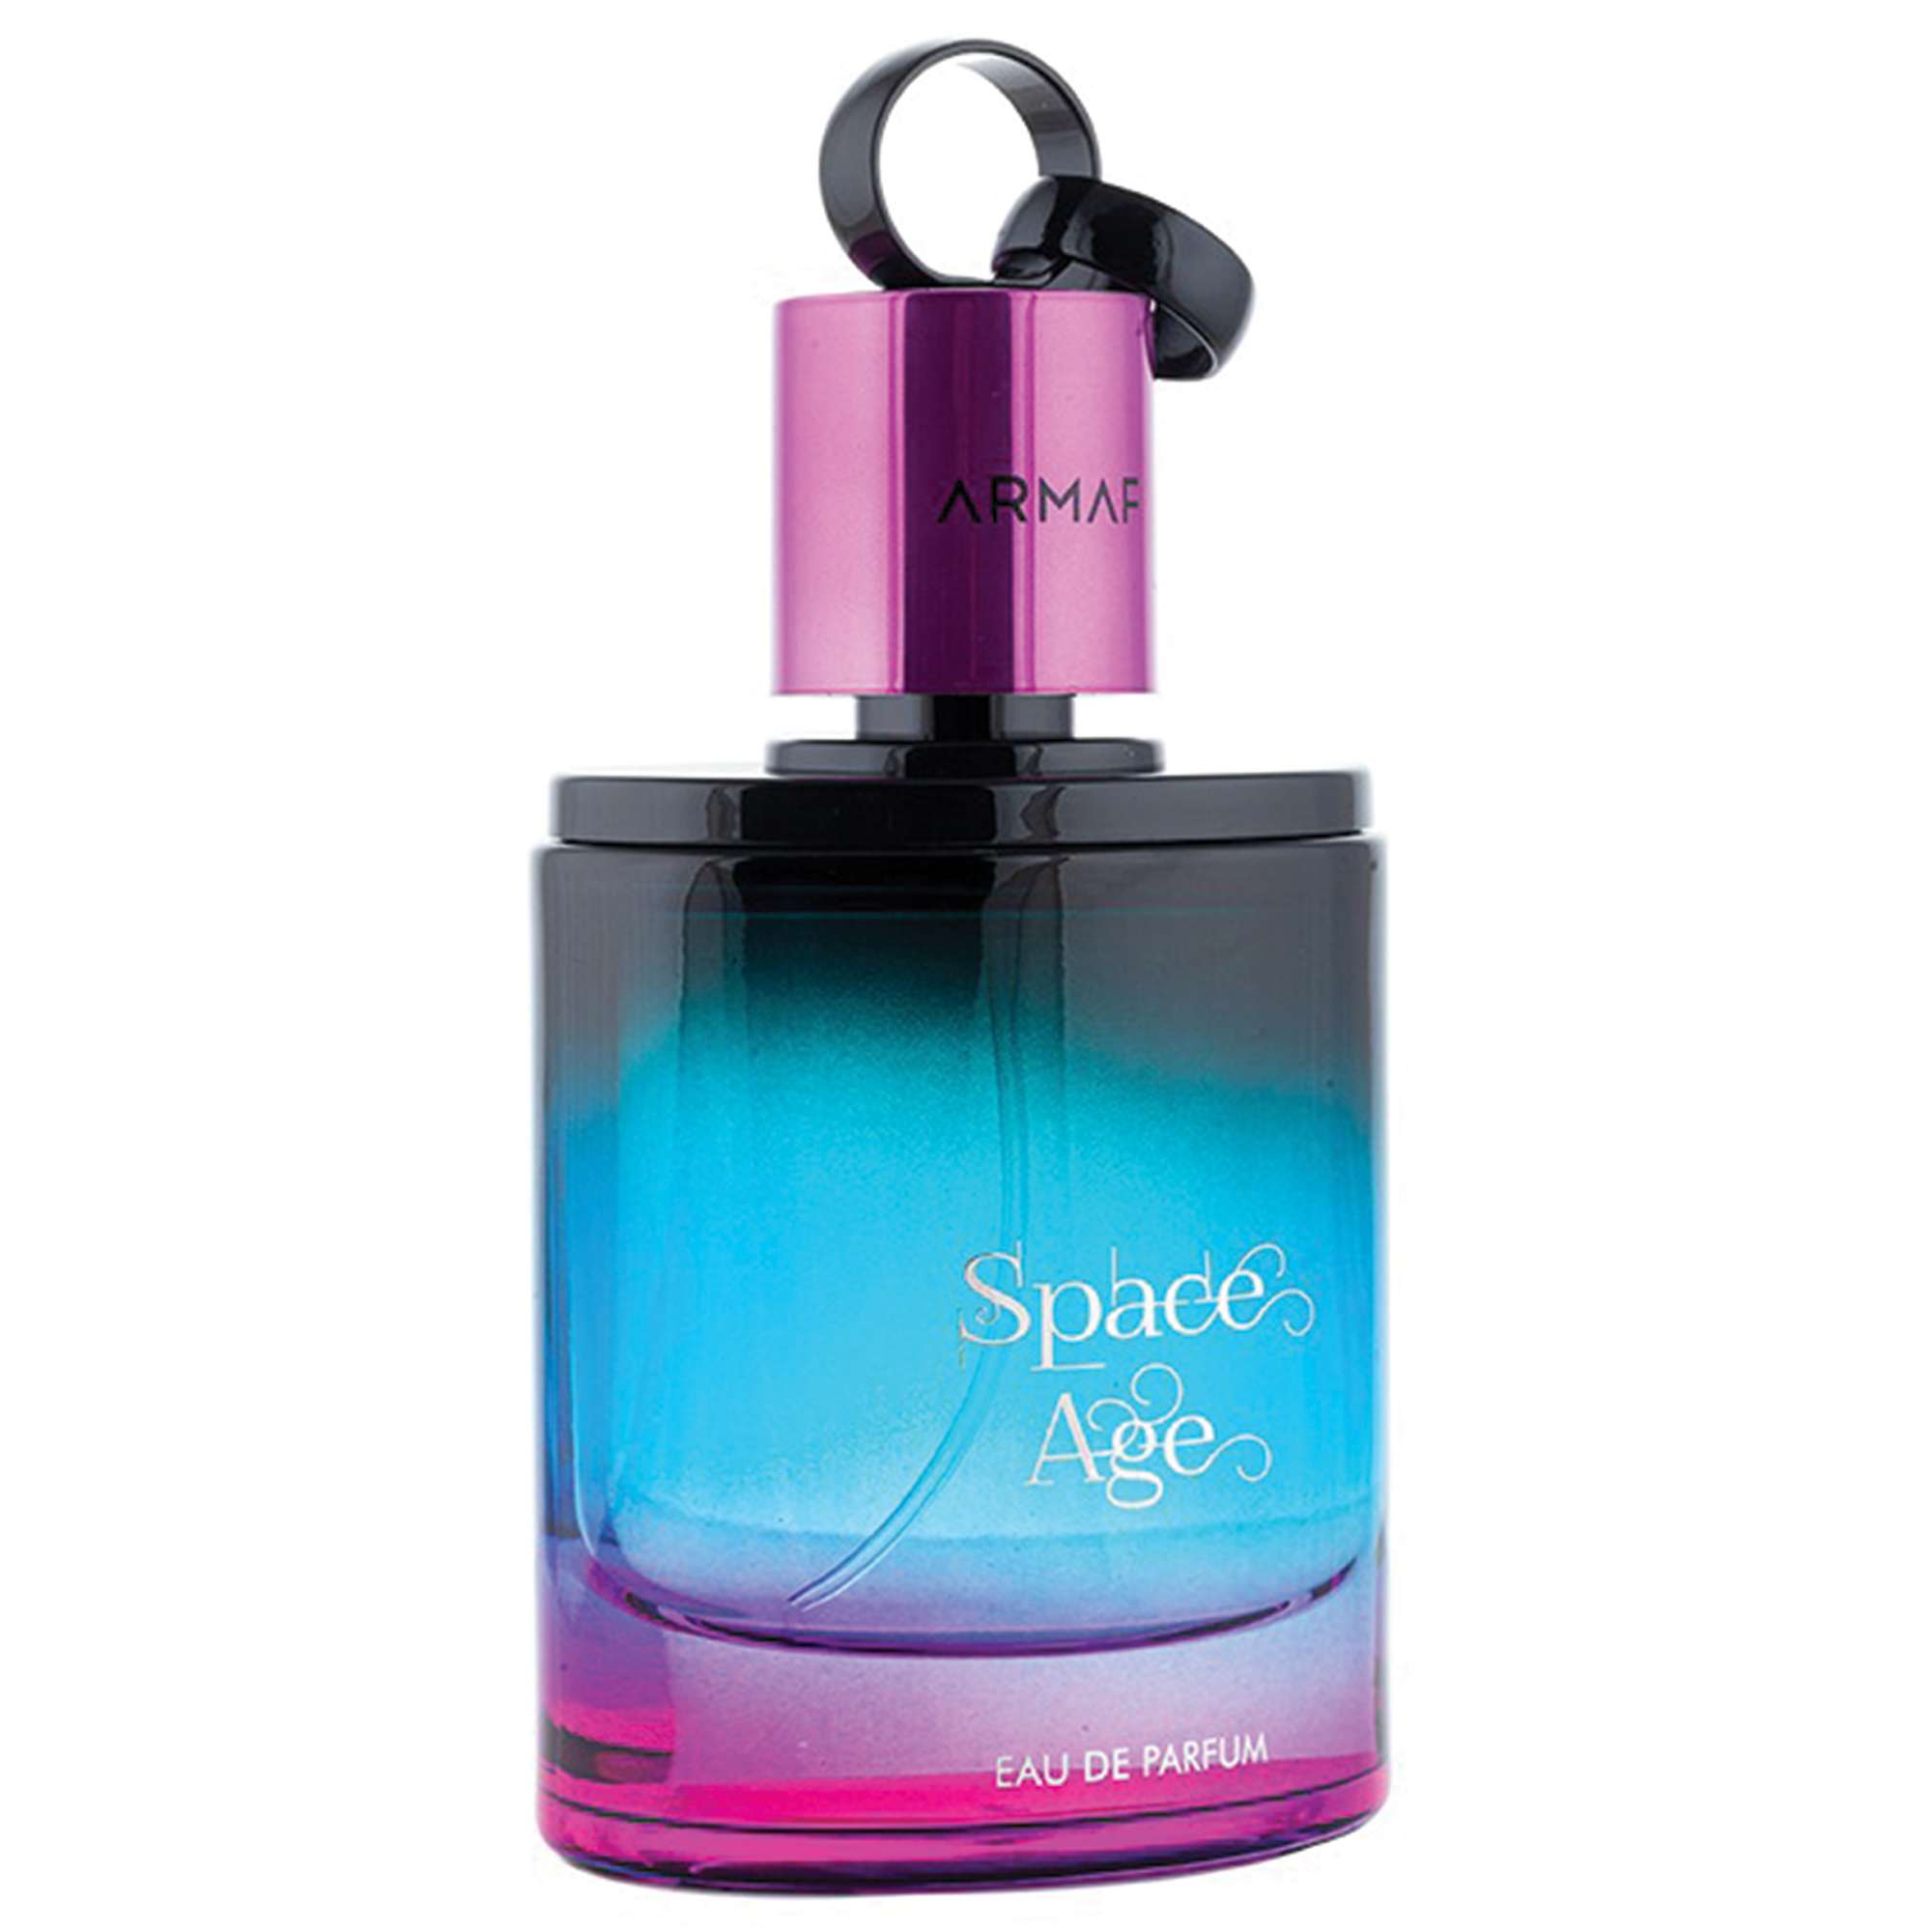 Photos - Men's Fragrance Armaf Space Age Eau de Parfum Spray 100ml 